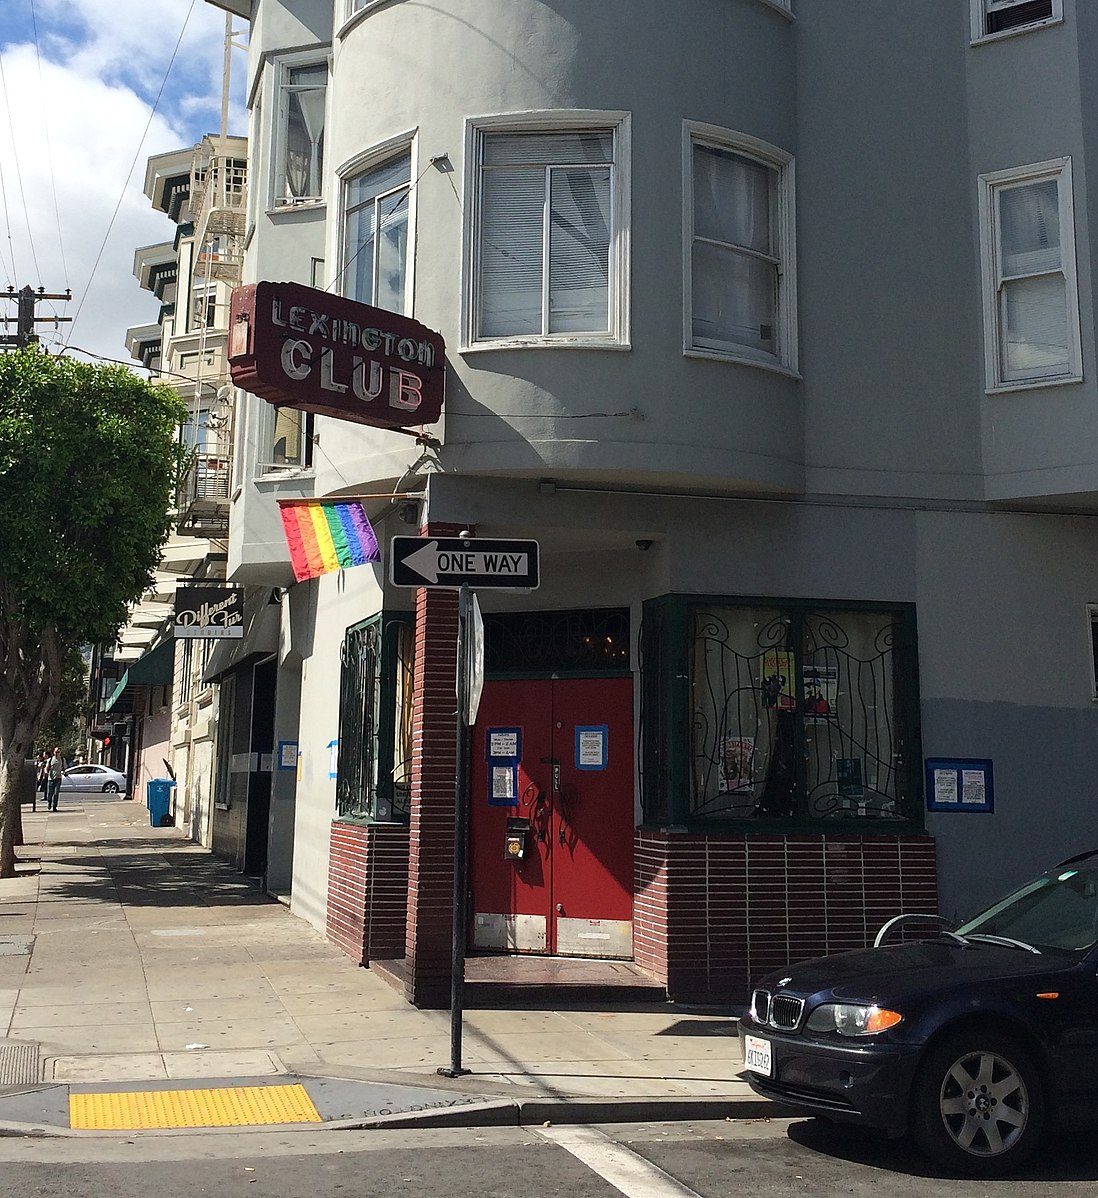 Lesbian dating tips in San Francisco